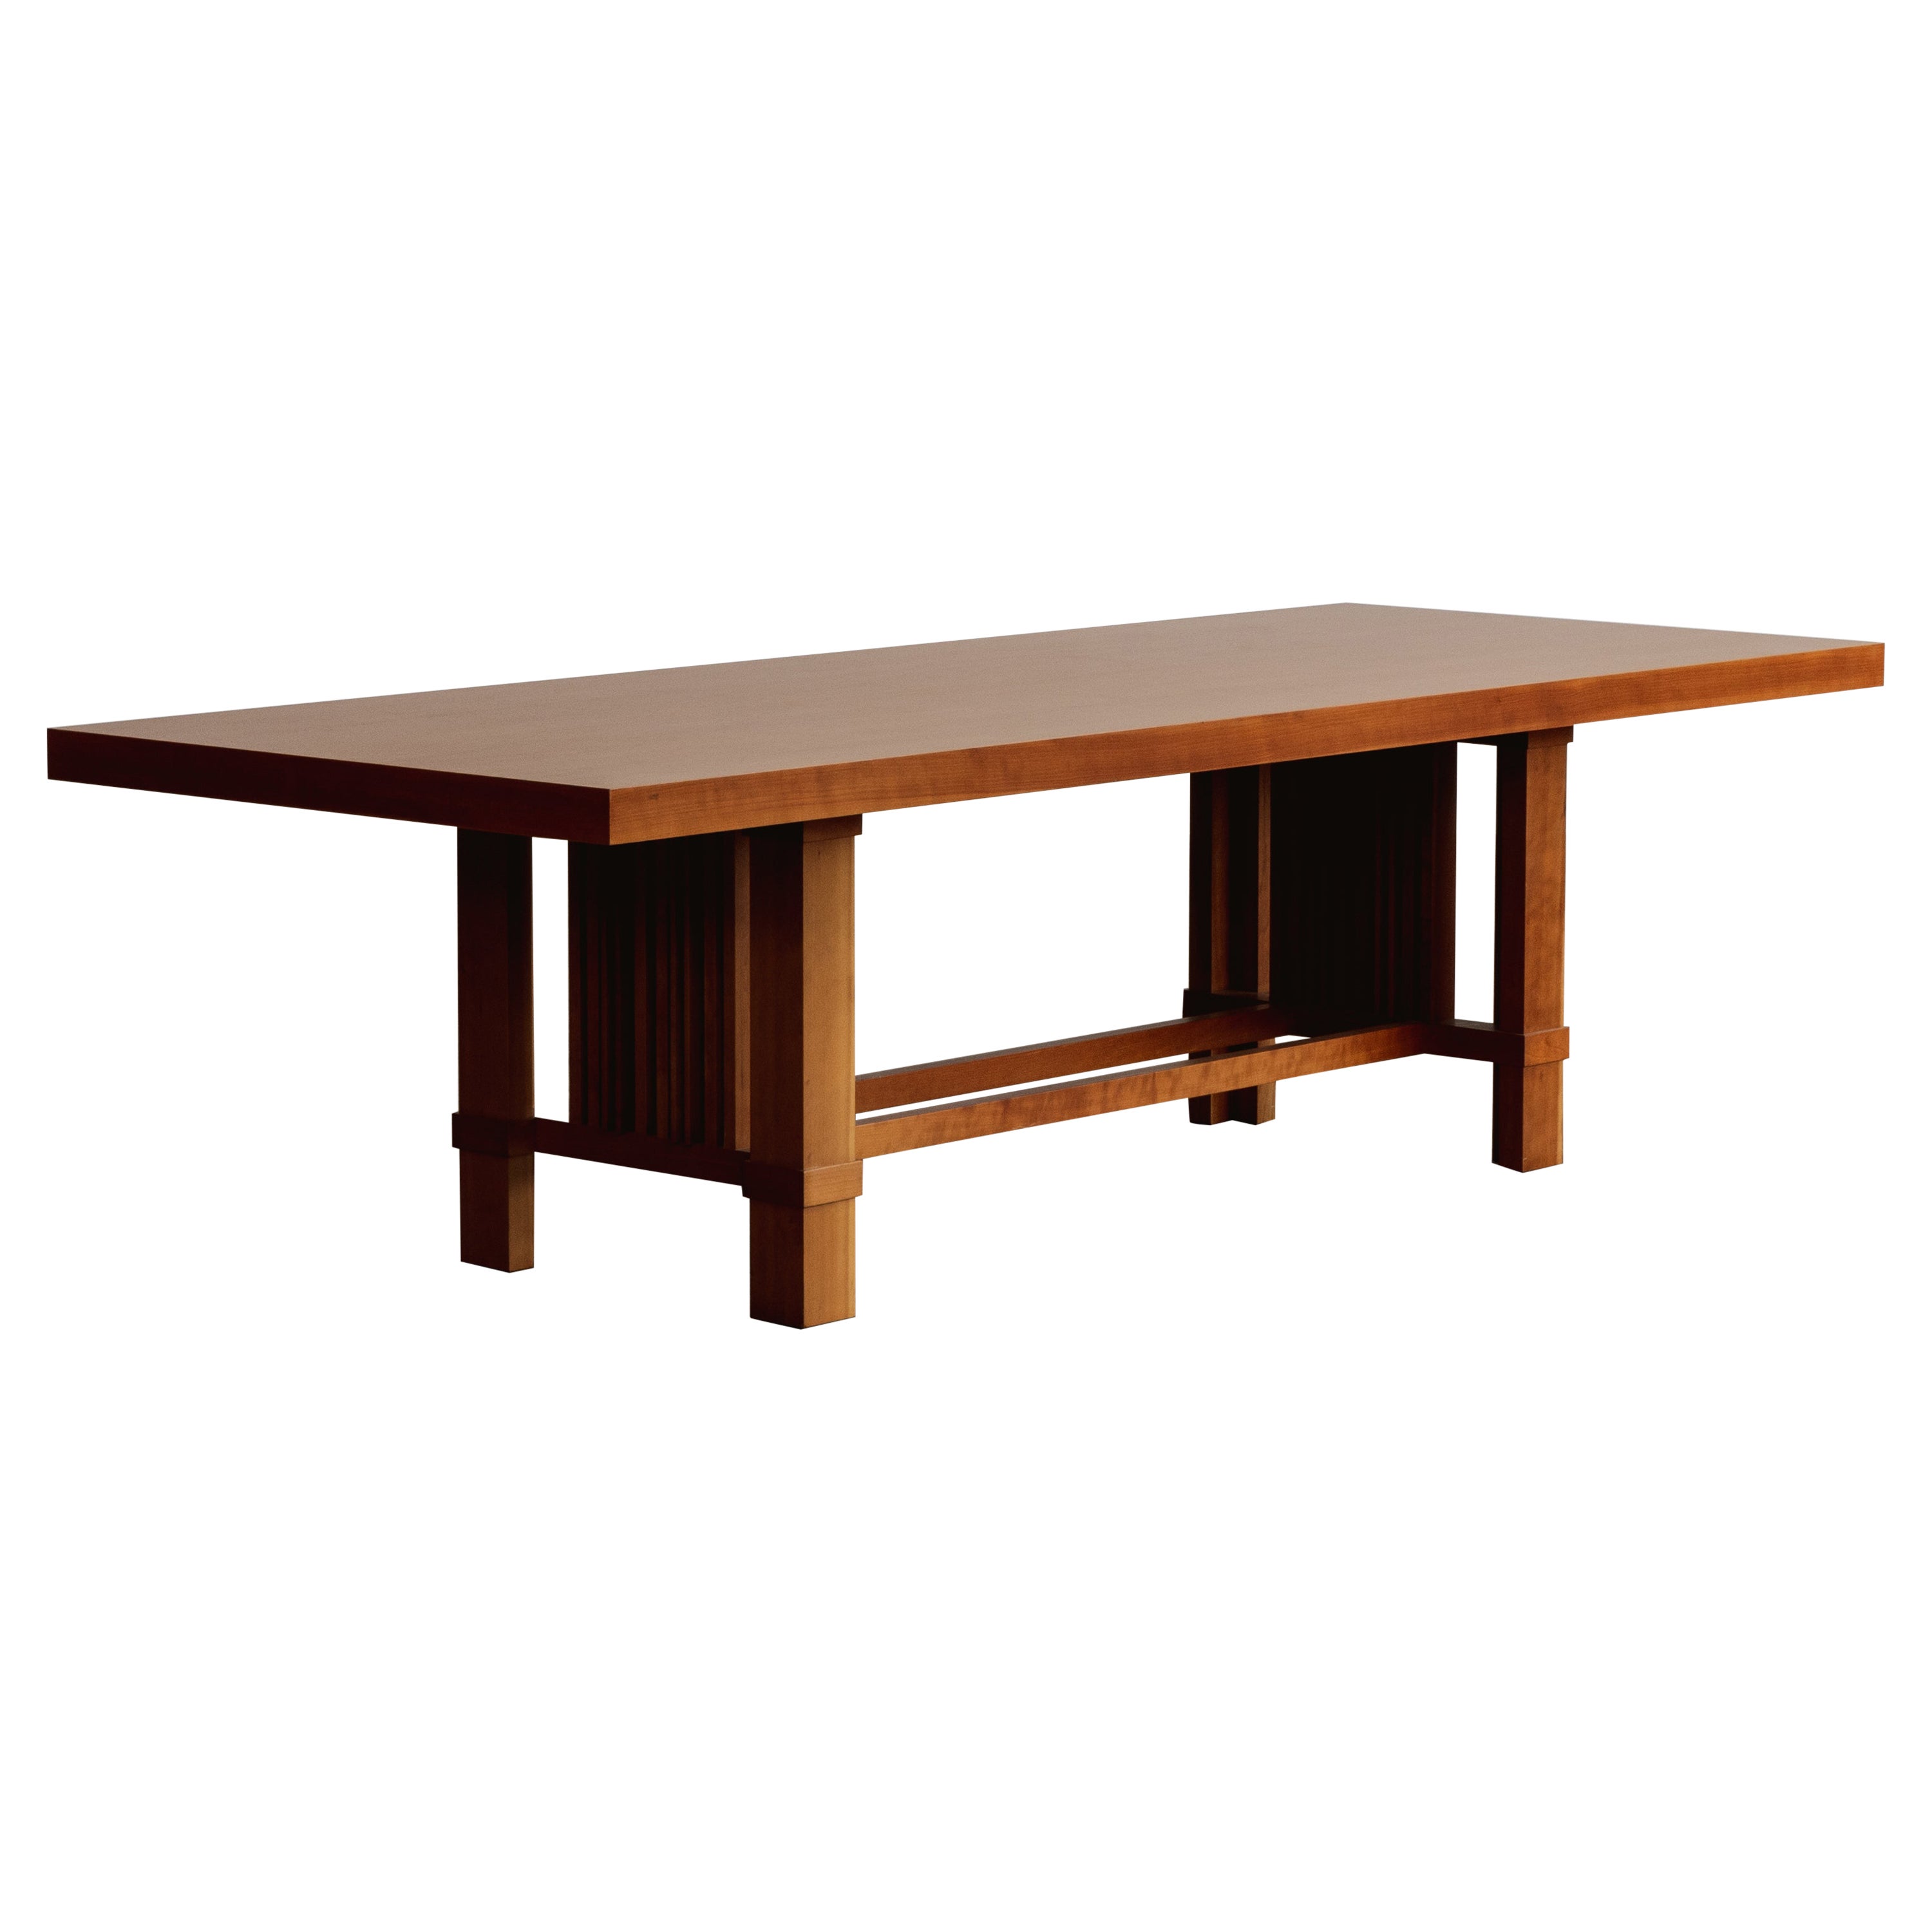 Frank Lloyd Wright “608 Taliesin” Dining Table for Cassina, 1986